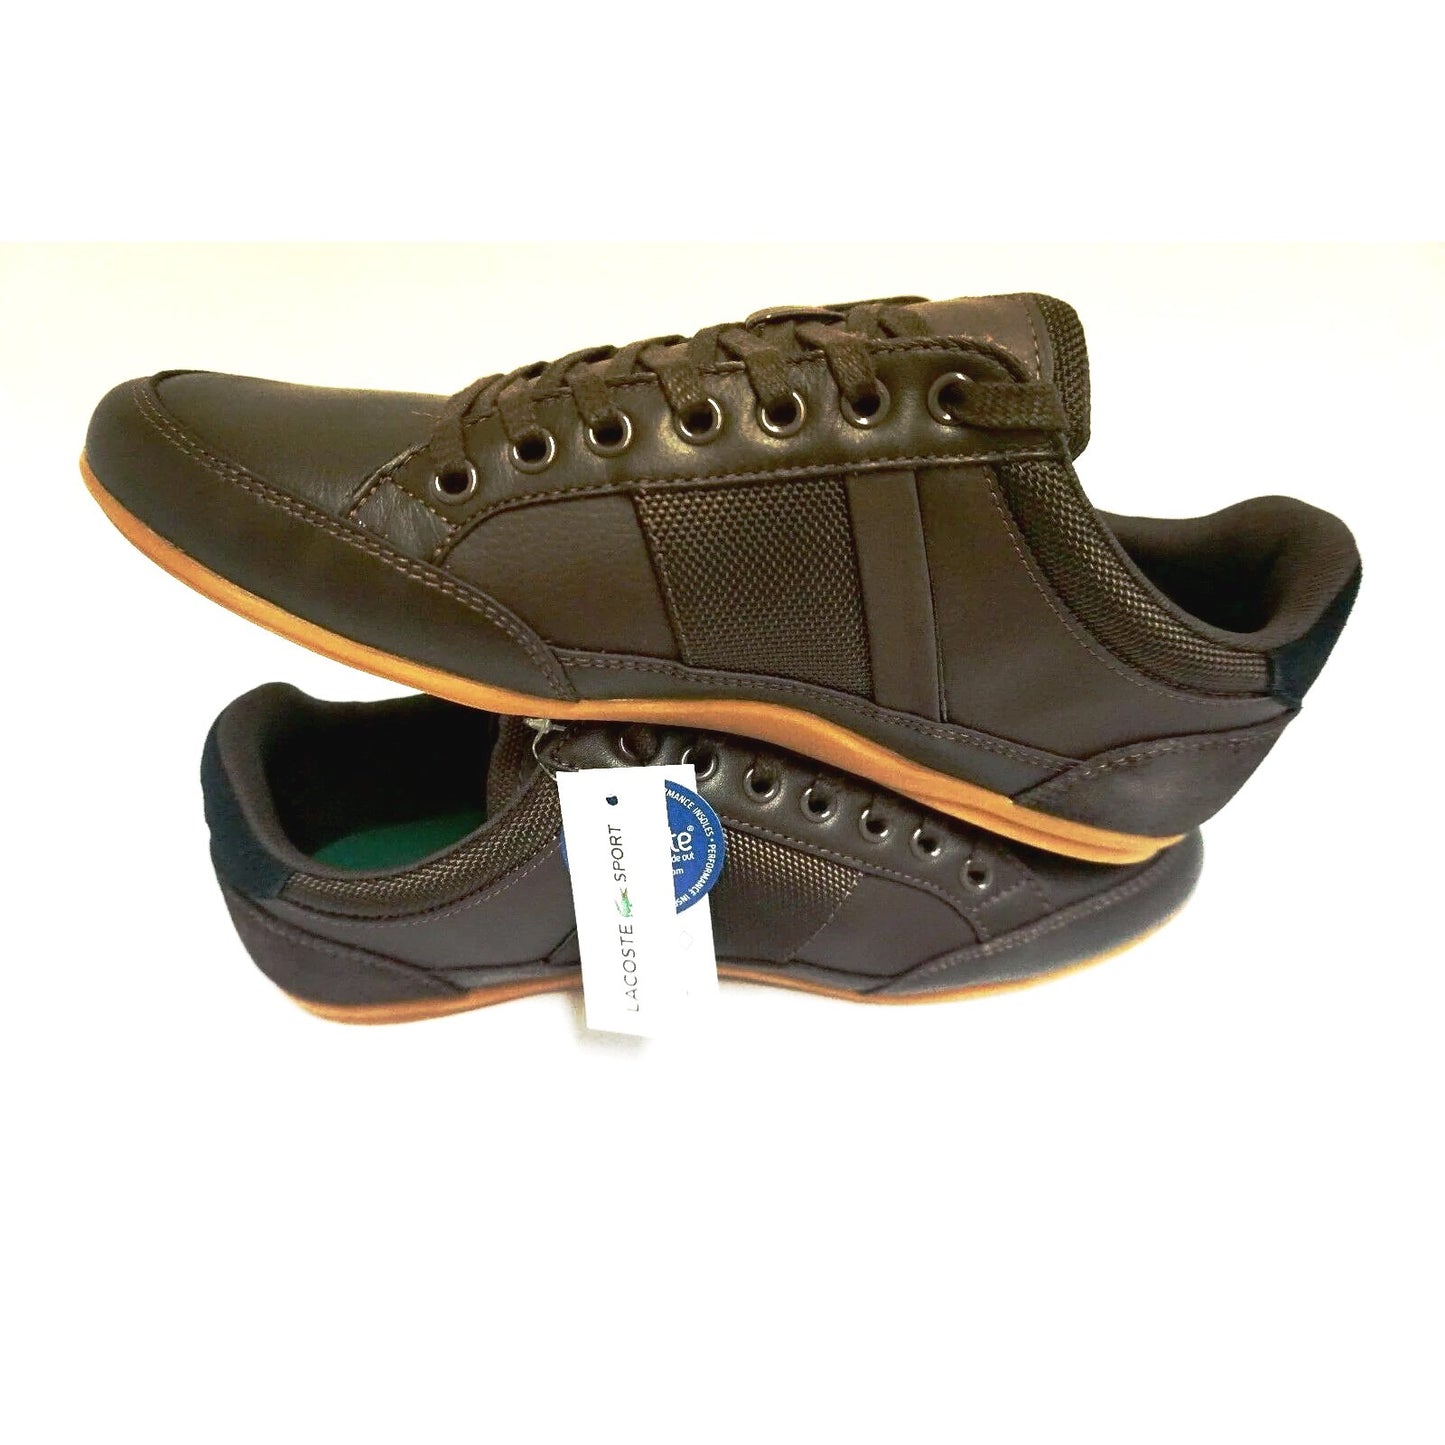 Lacoste men shoes chaymon 116 1 spm leather dark brown black size 8 new